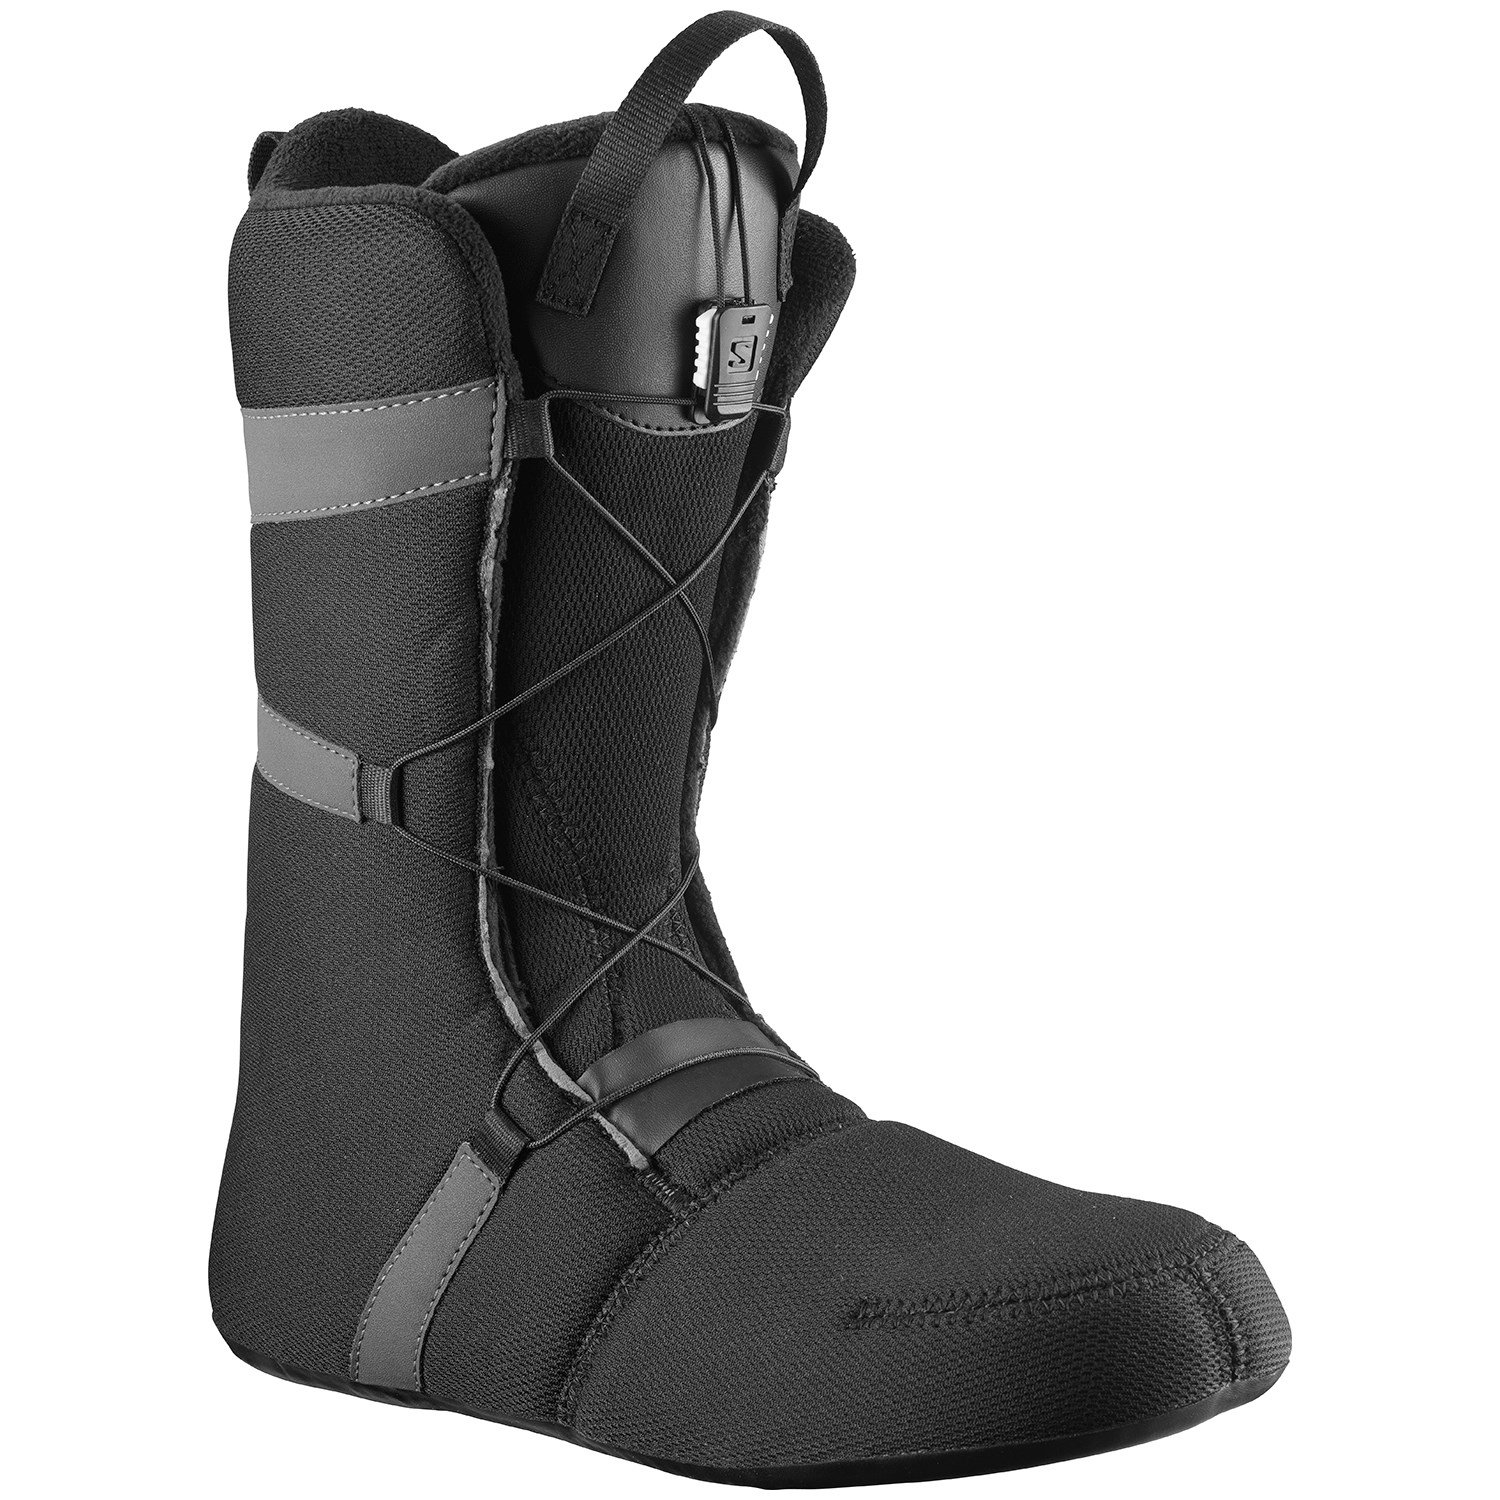 Launch Boa SJ Snowboard Boots 2021 | evo